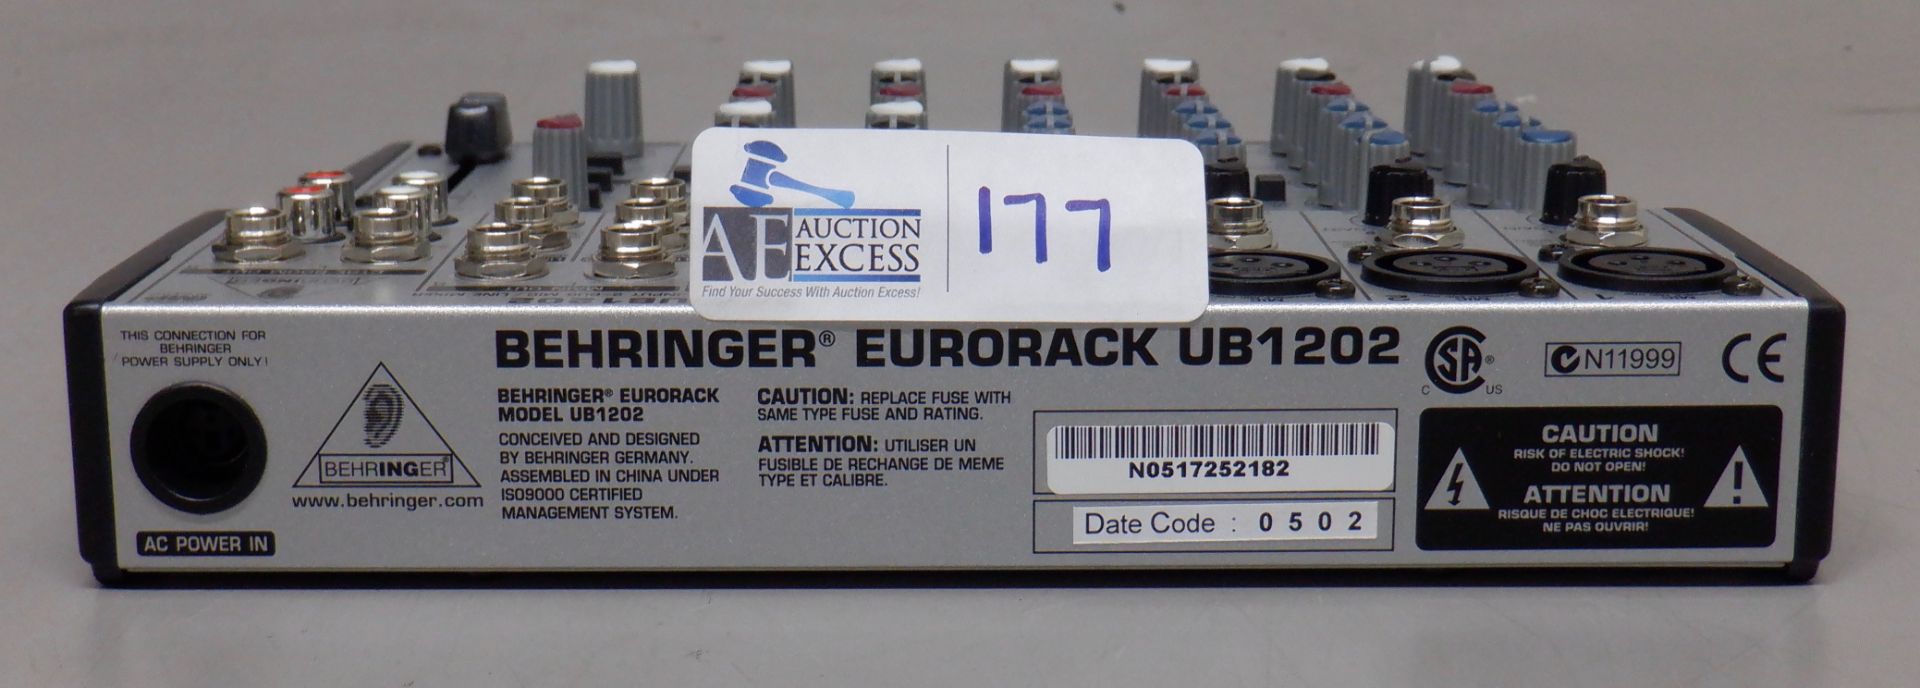 BEHRINGER EURORACK UB 1202 IN ORIGINAL BOX - Image 4 of 4